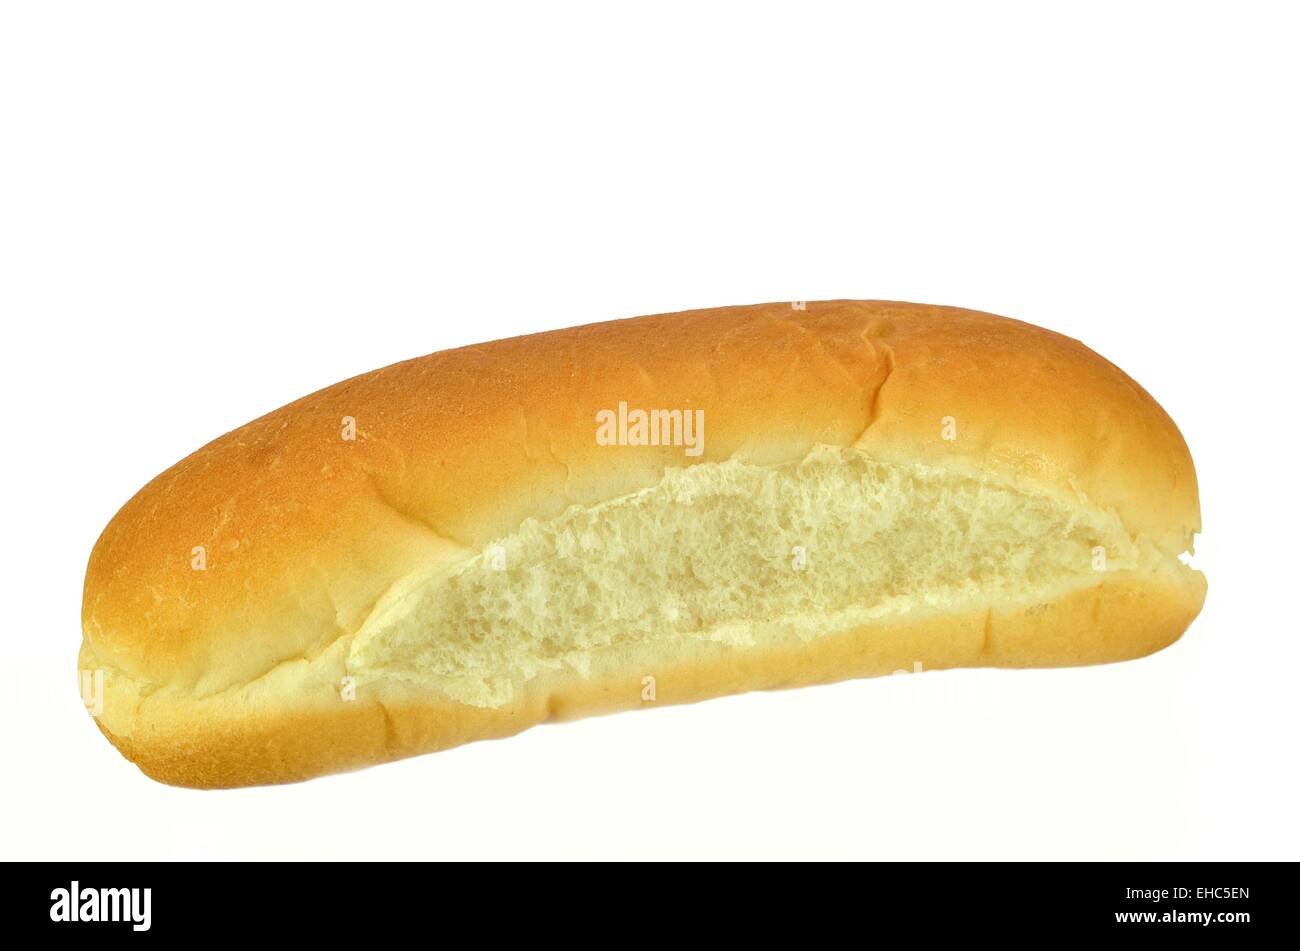 Hot dog bun on a white background. Stock Photo